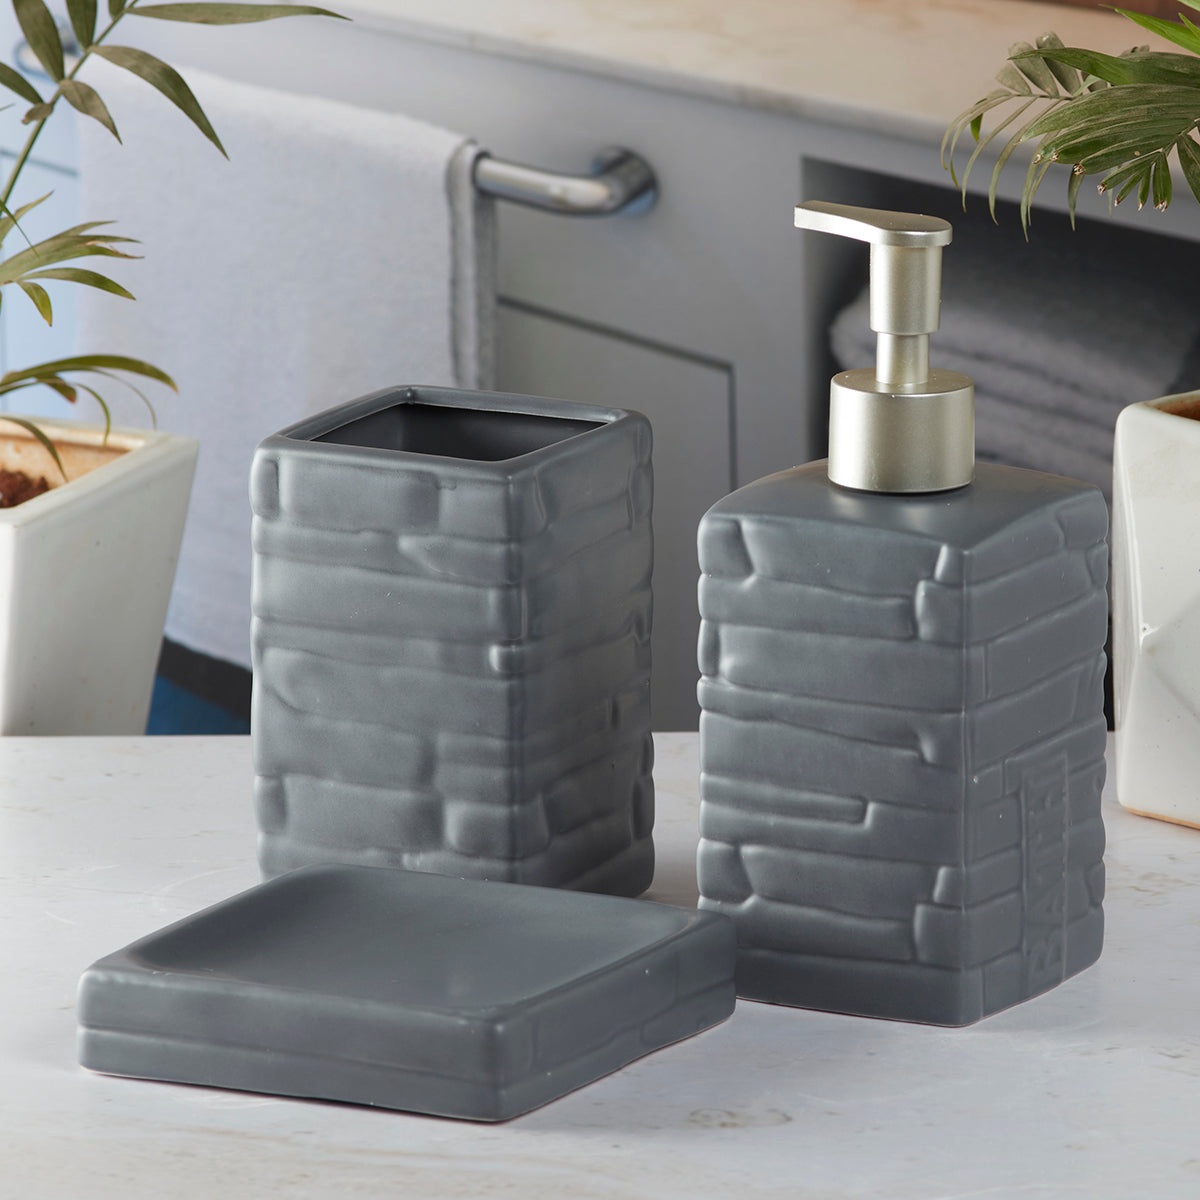 Ceramic Bathroom Accessories Set of 3 Bath Set with Soap Dispenser (8060)